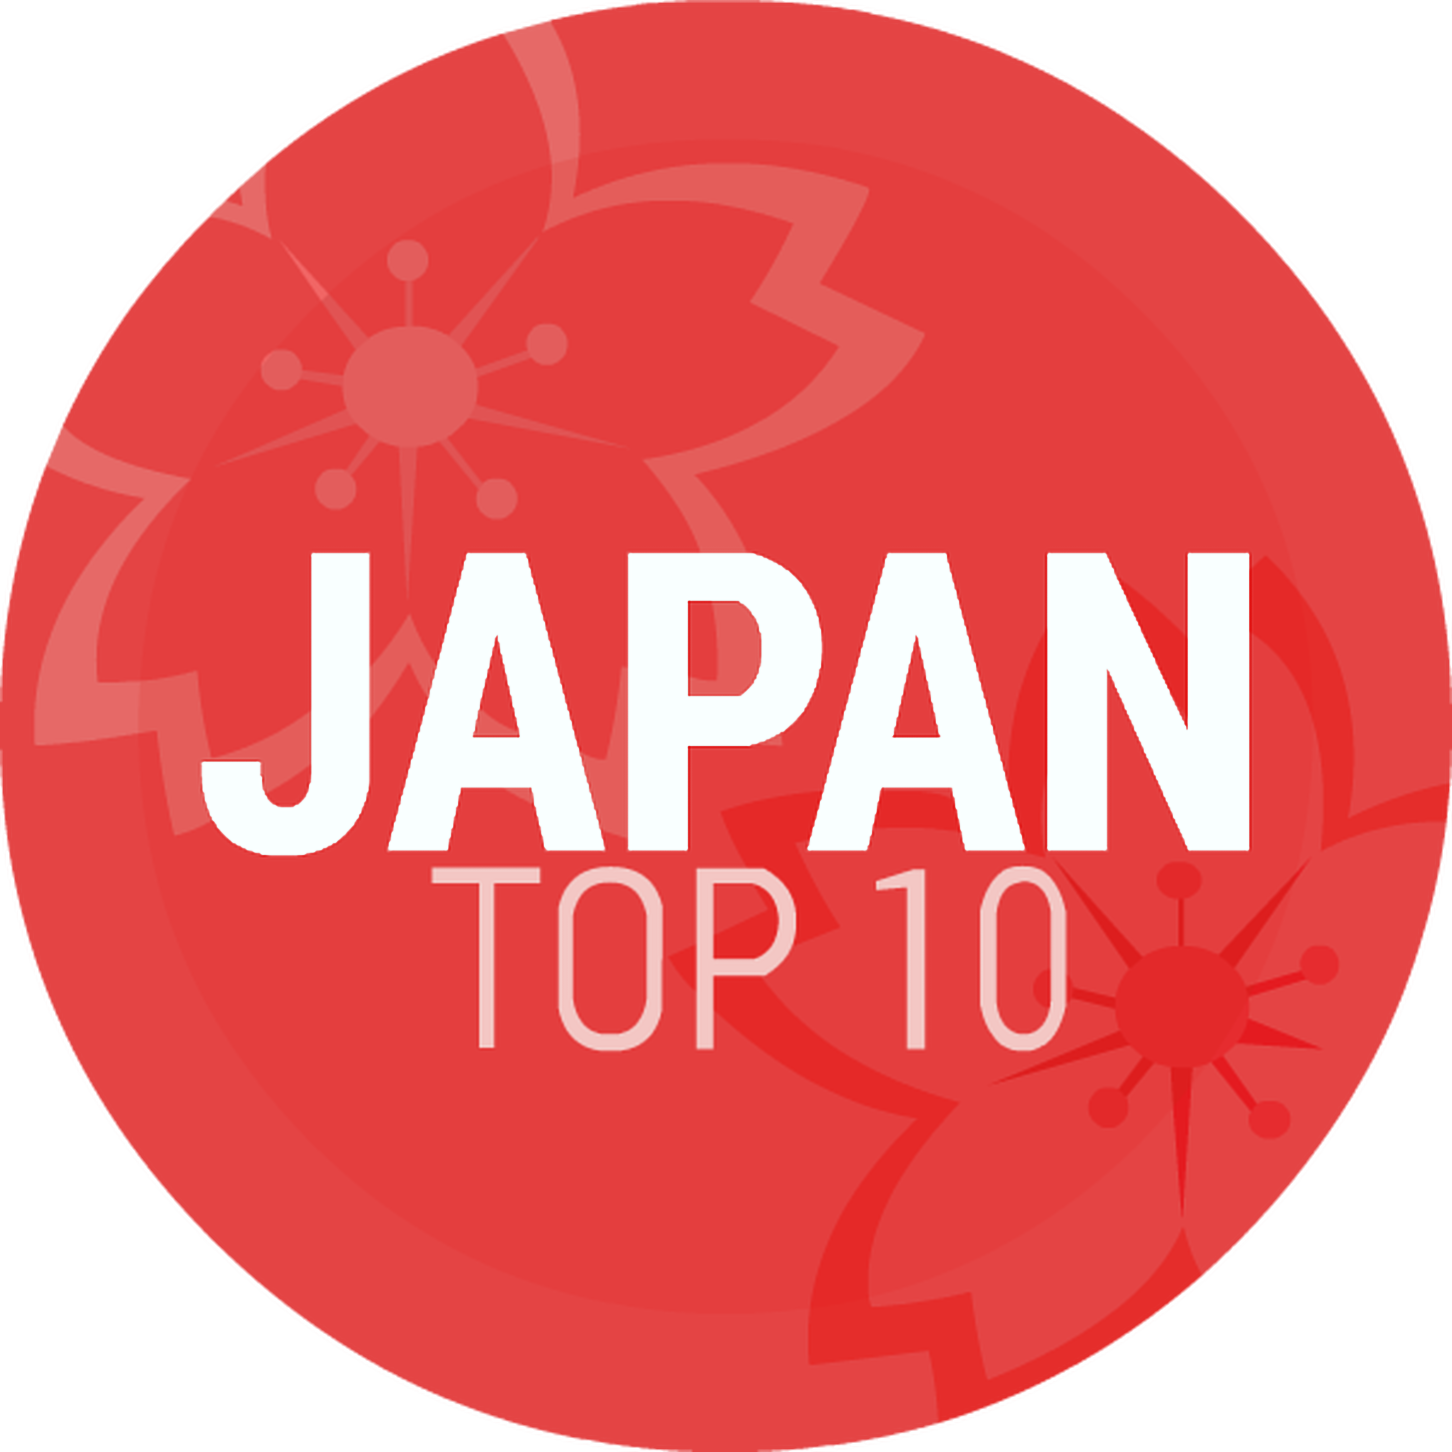 Episode 190: Japan Top 10 Summer Special #3: DC & William's Collab Episode